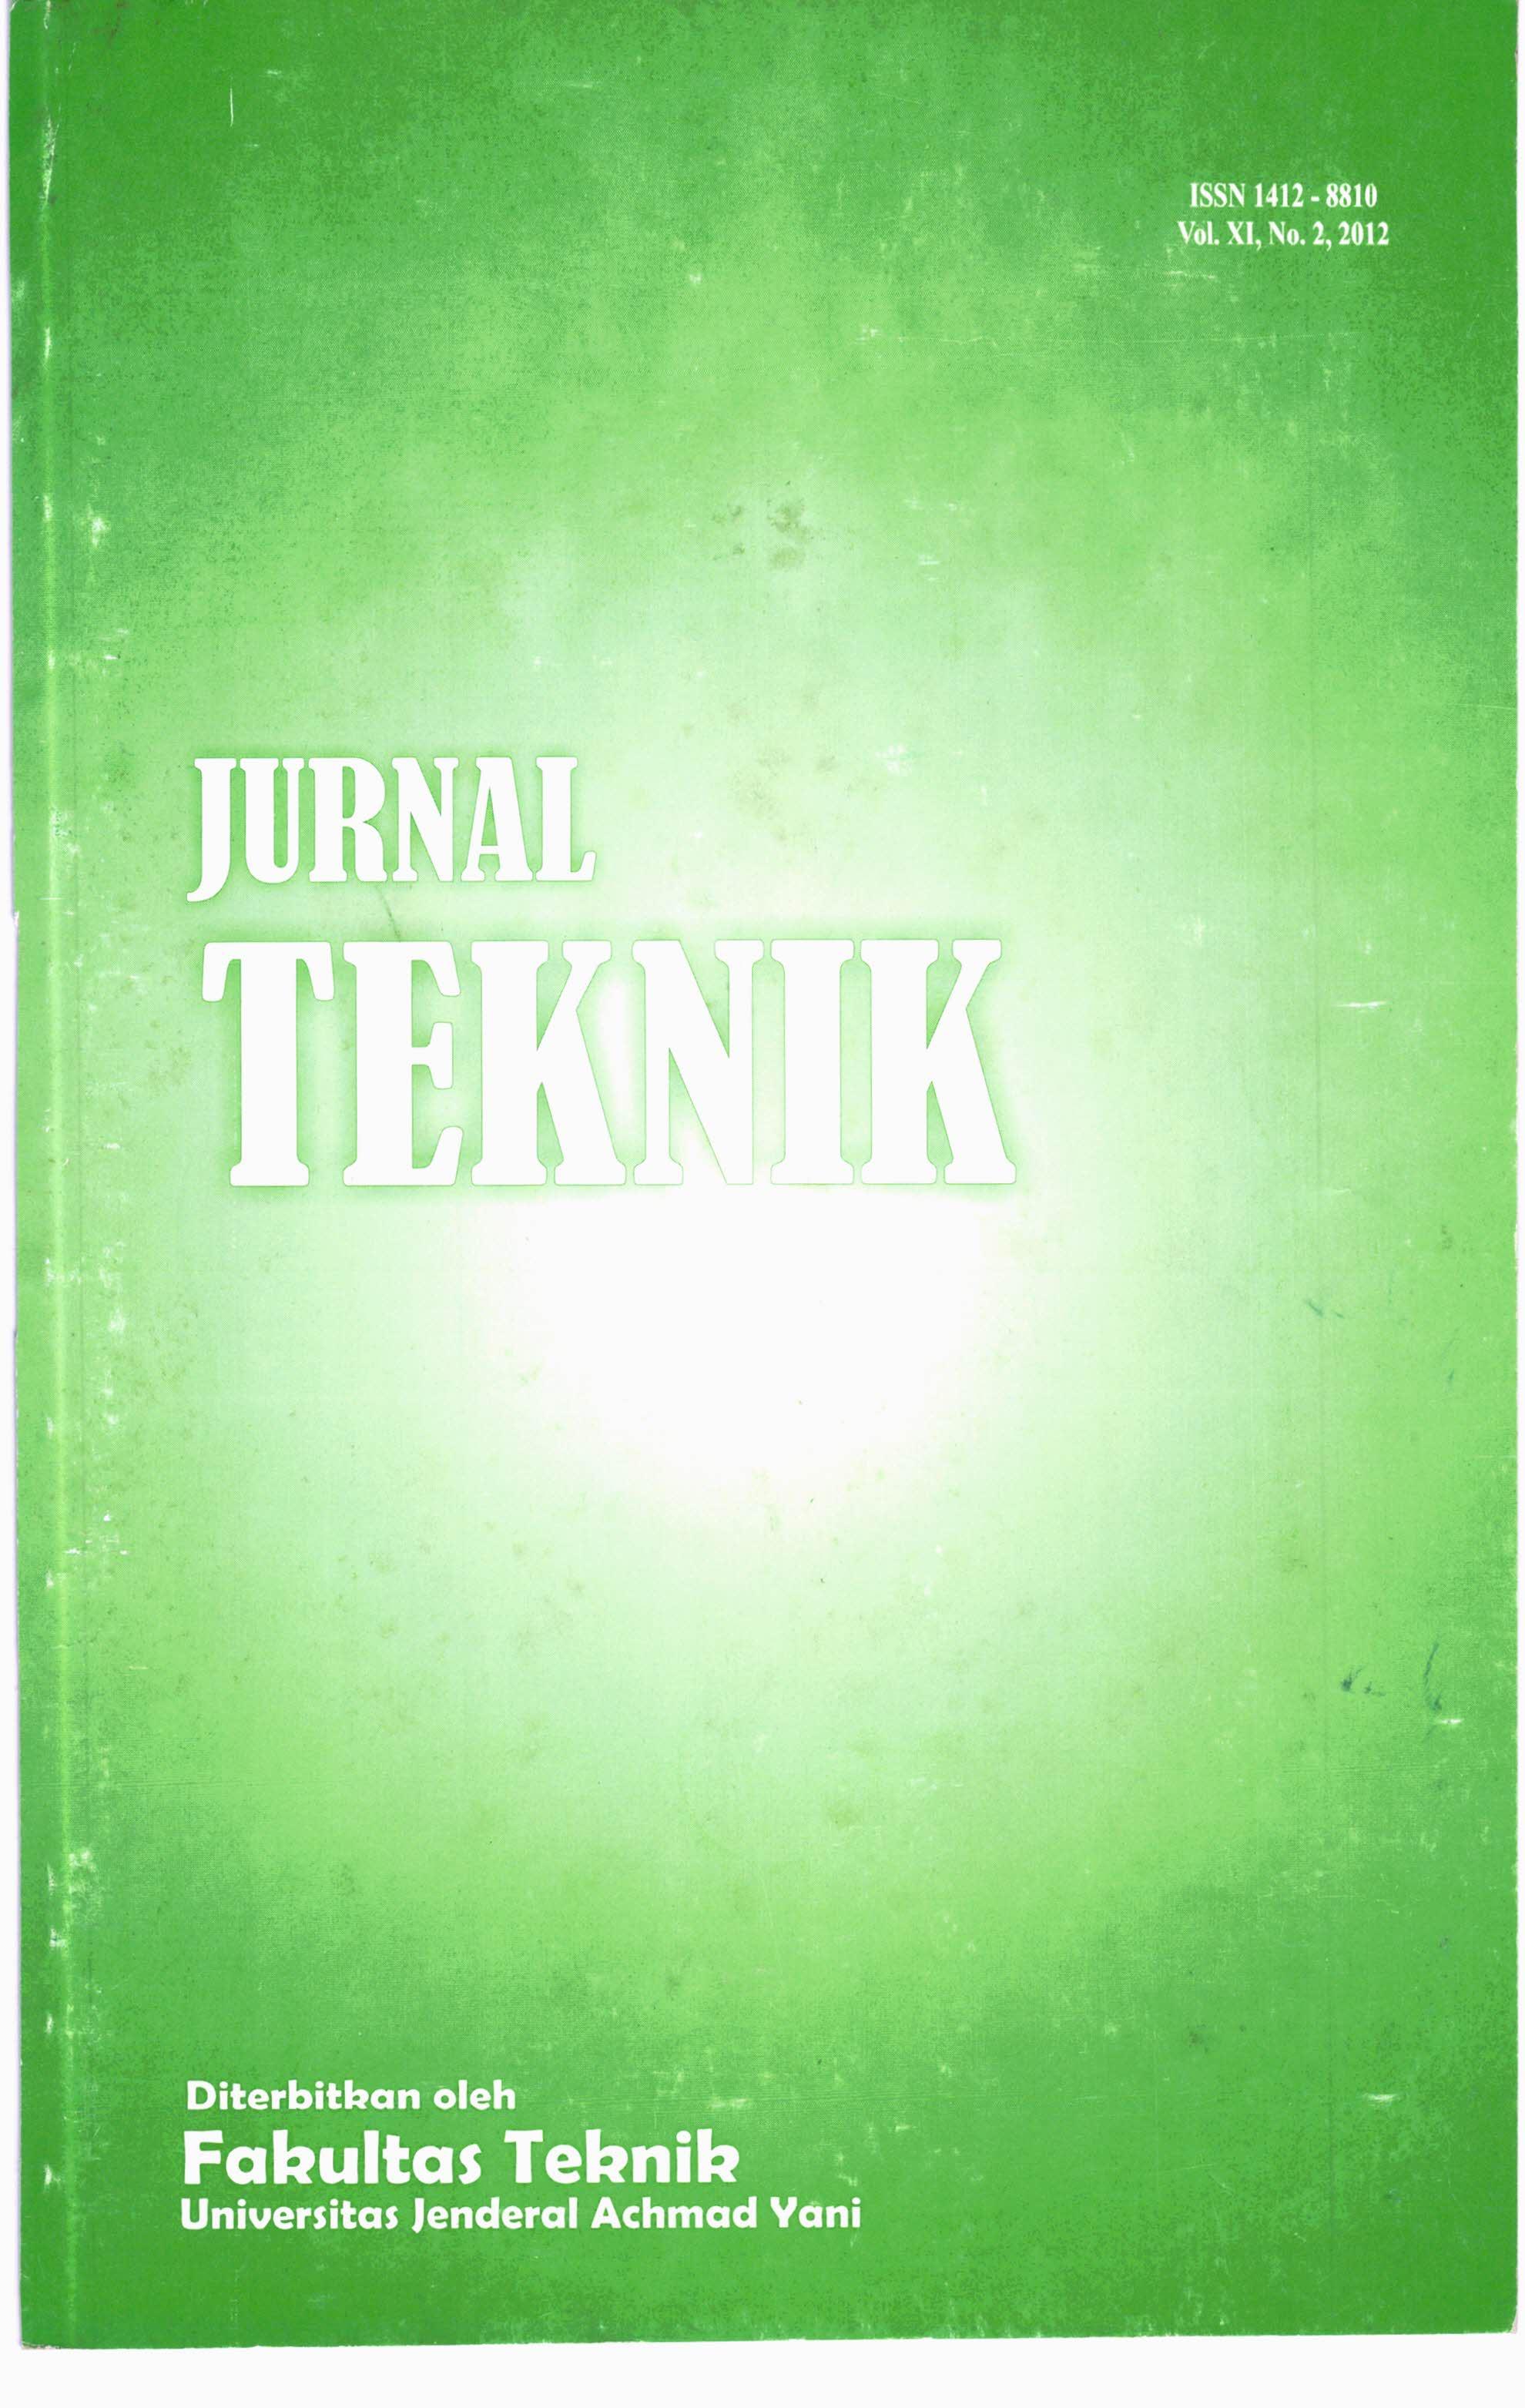 					View Vol. 11 No. 2 (2012): Jurnal Teknik - Media Pengembangan Ilmu dan Aplikasi Teknik
				